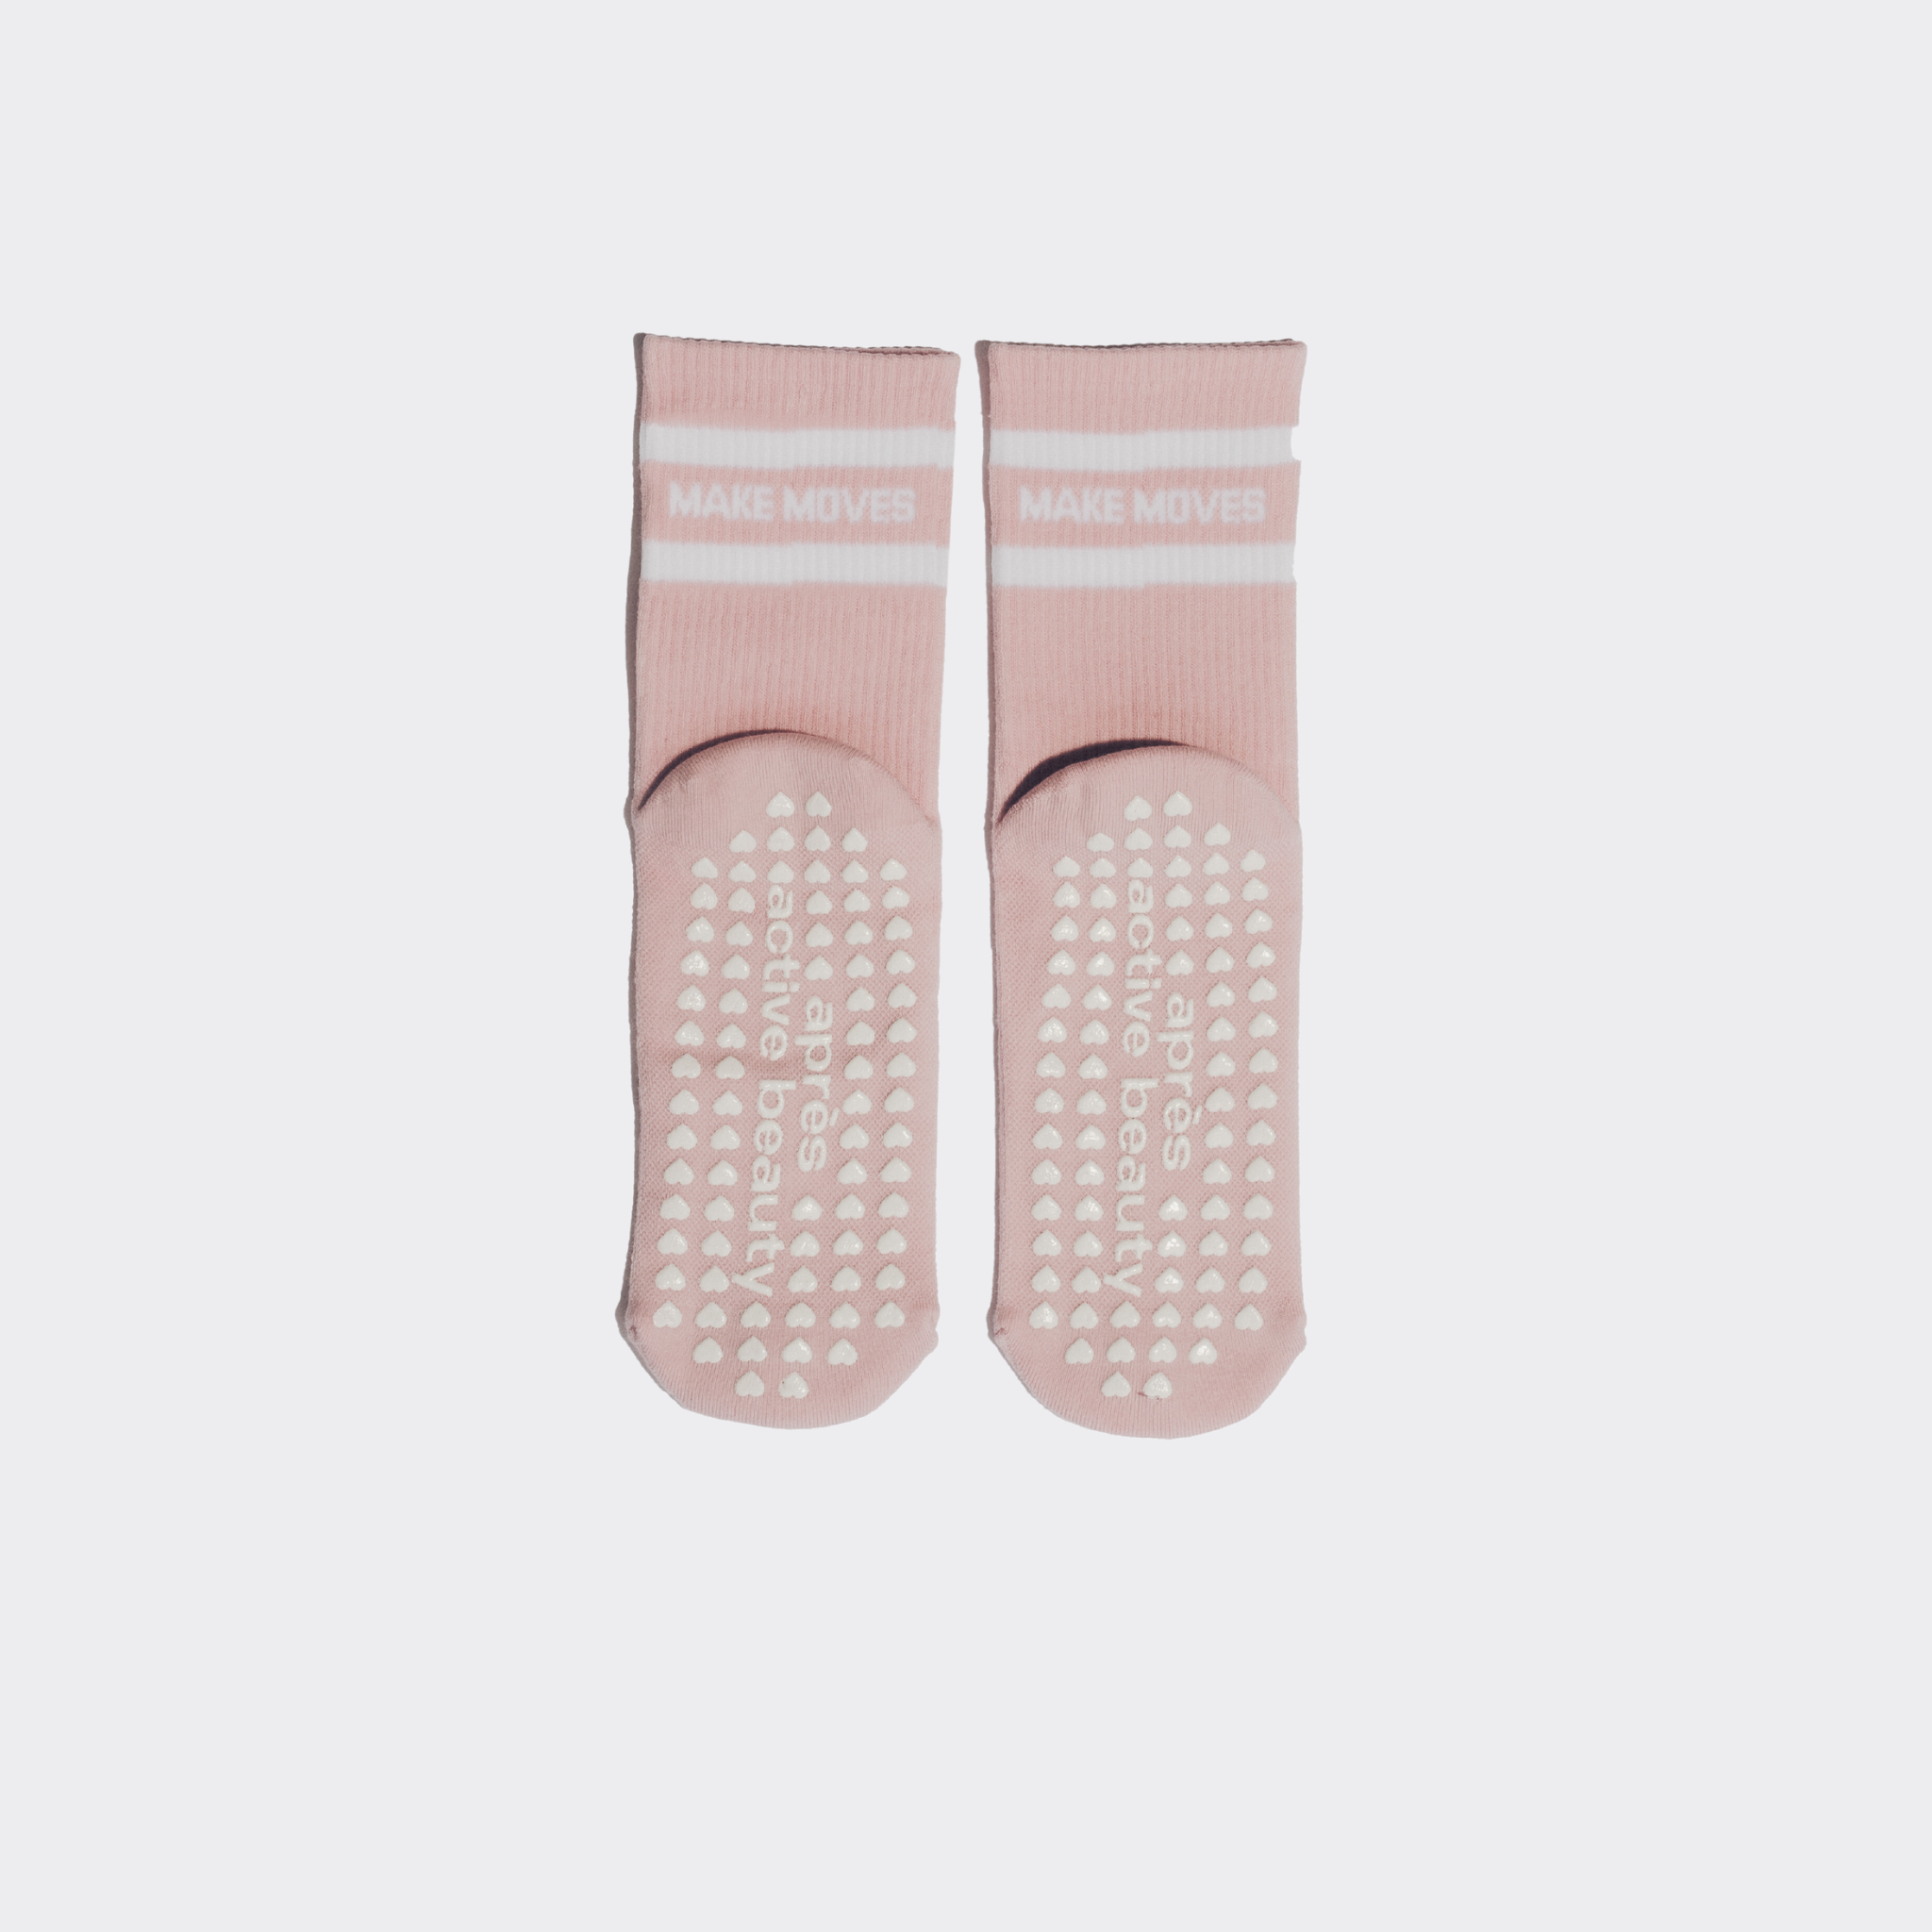 Pilates Sock (Lace Up)